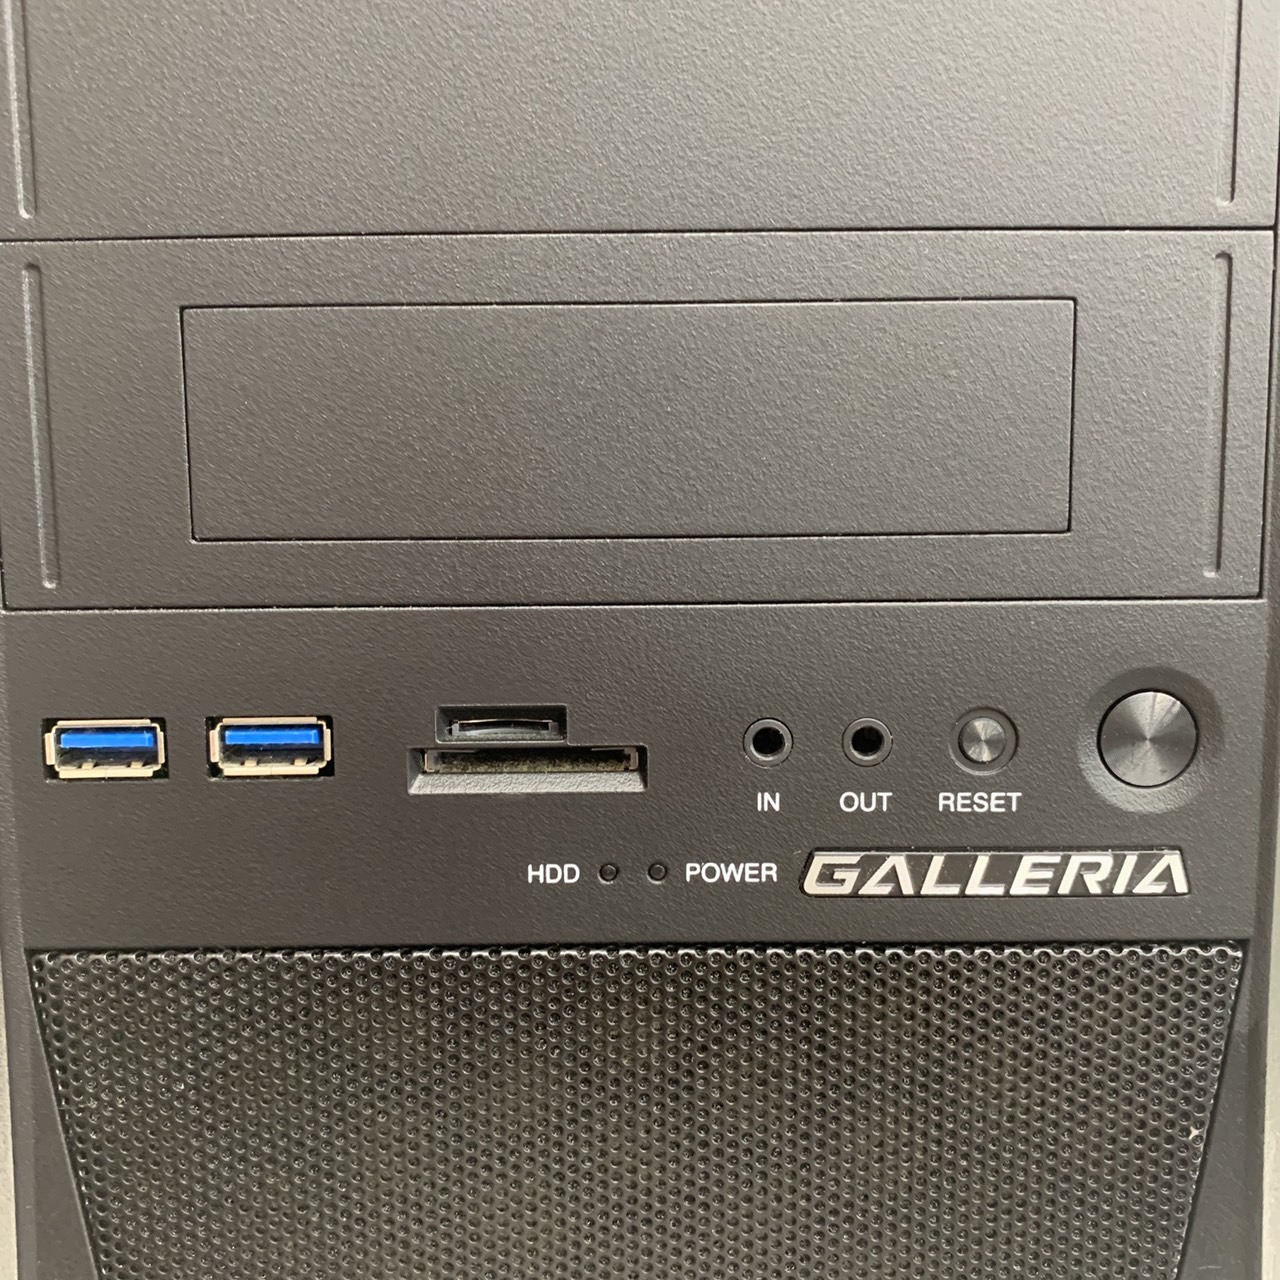 Thirdwave GALLERIA XF ゲーミングPC Intel Core i7 4790K/GTX970 4GB 